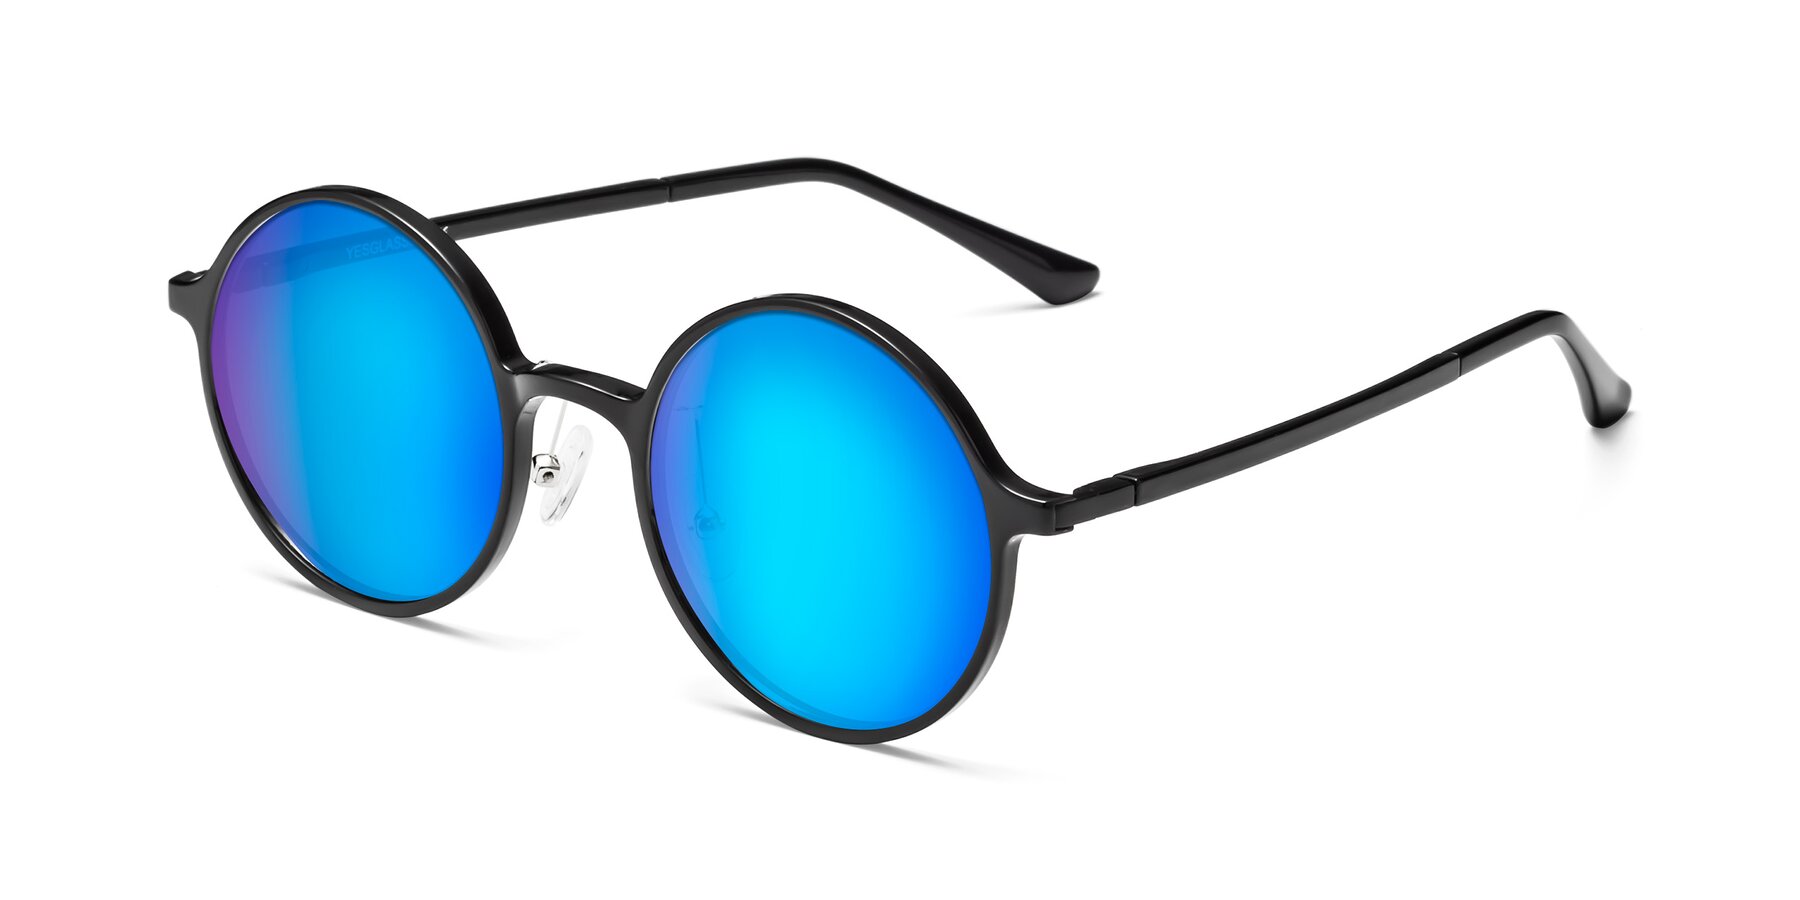 Blue Thin Round with Mirrored Sunglasses Sunwear Lenses - Lemon Black Retro-Vintage